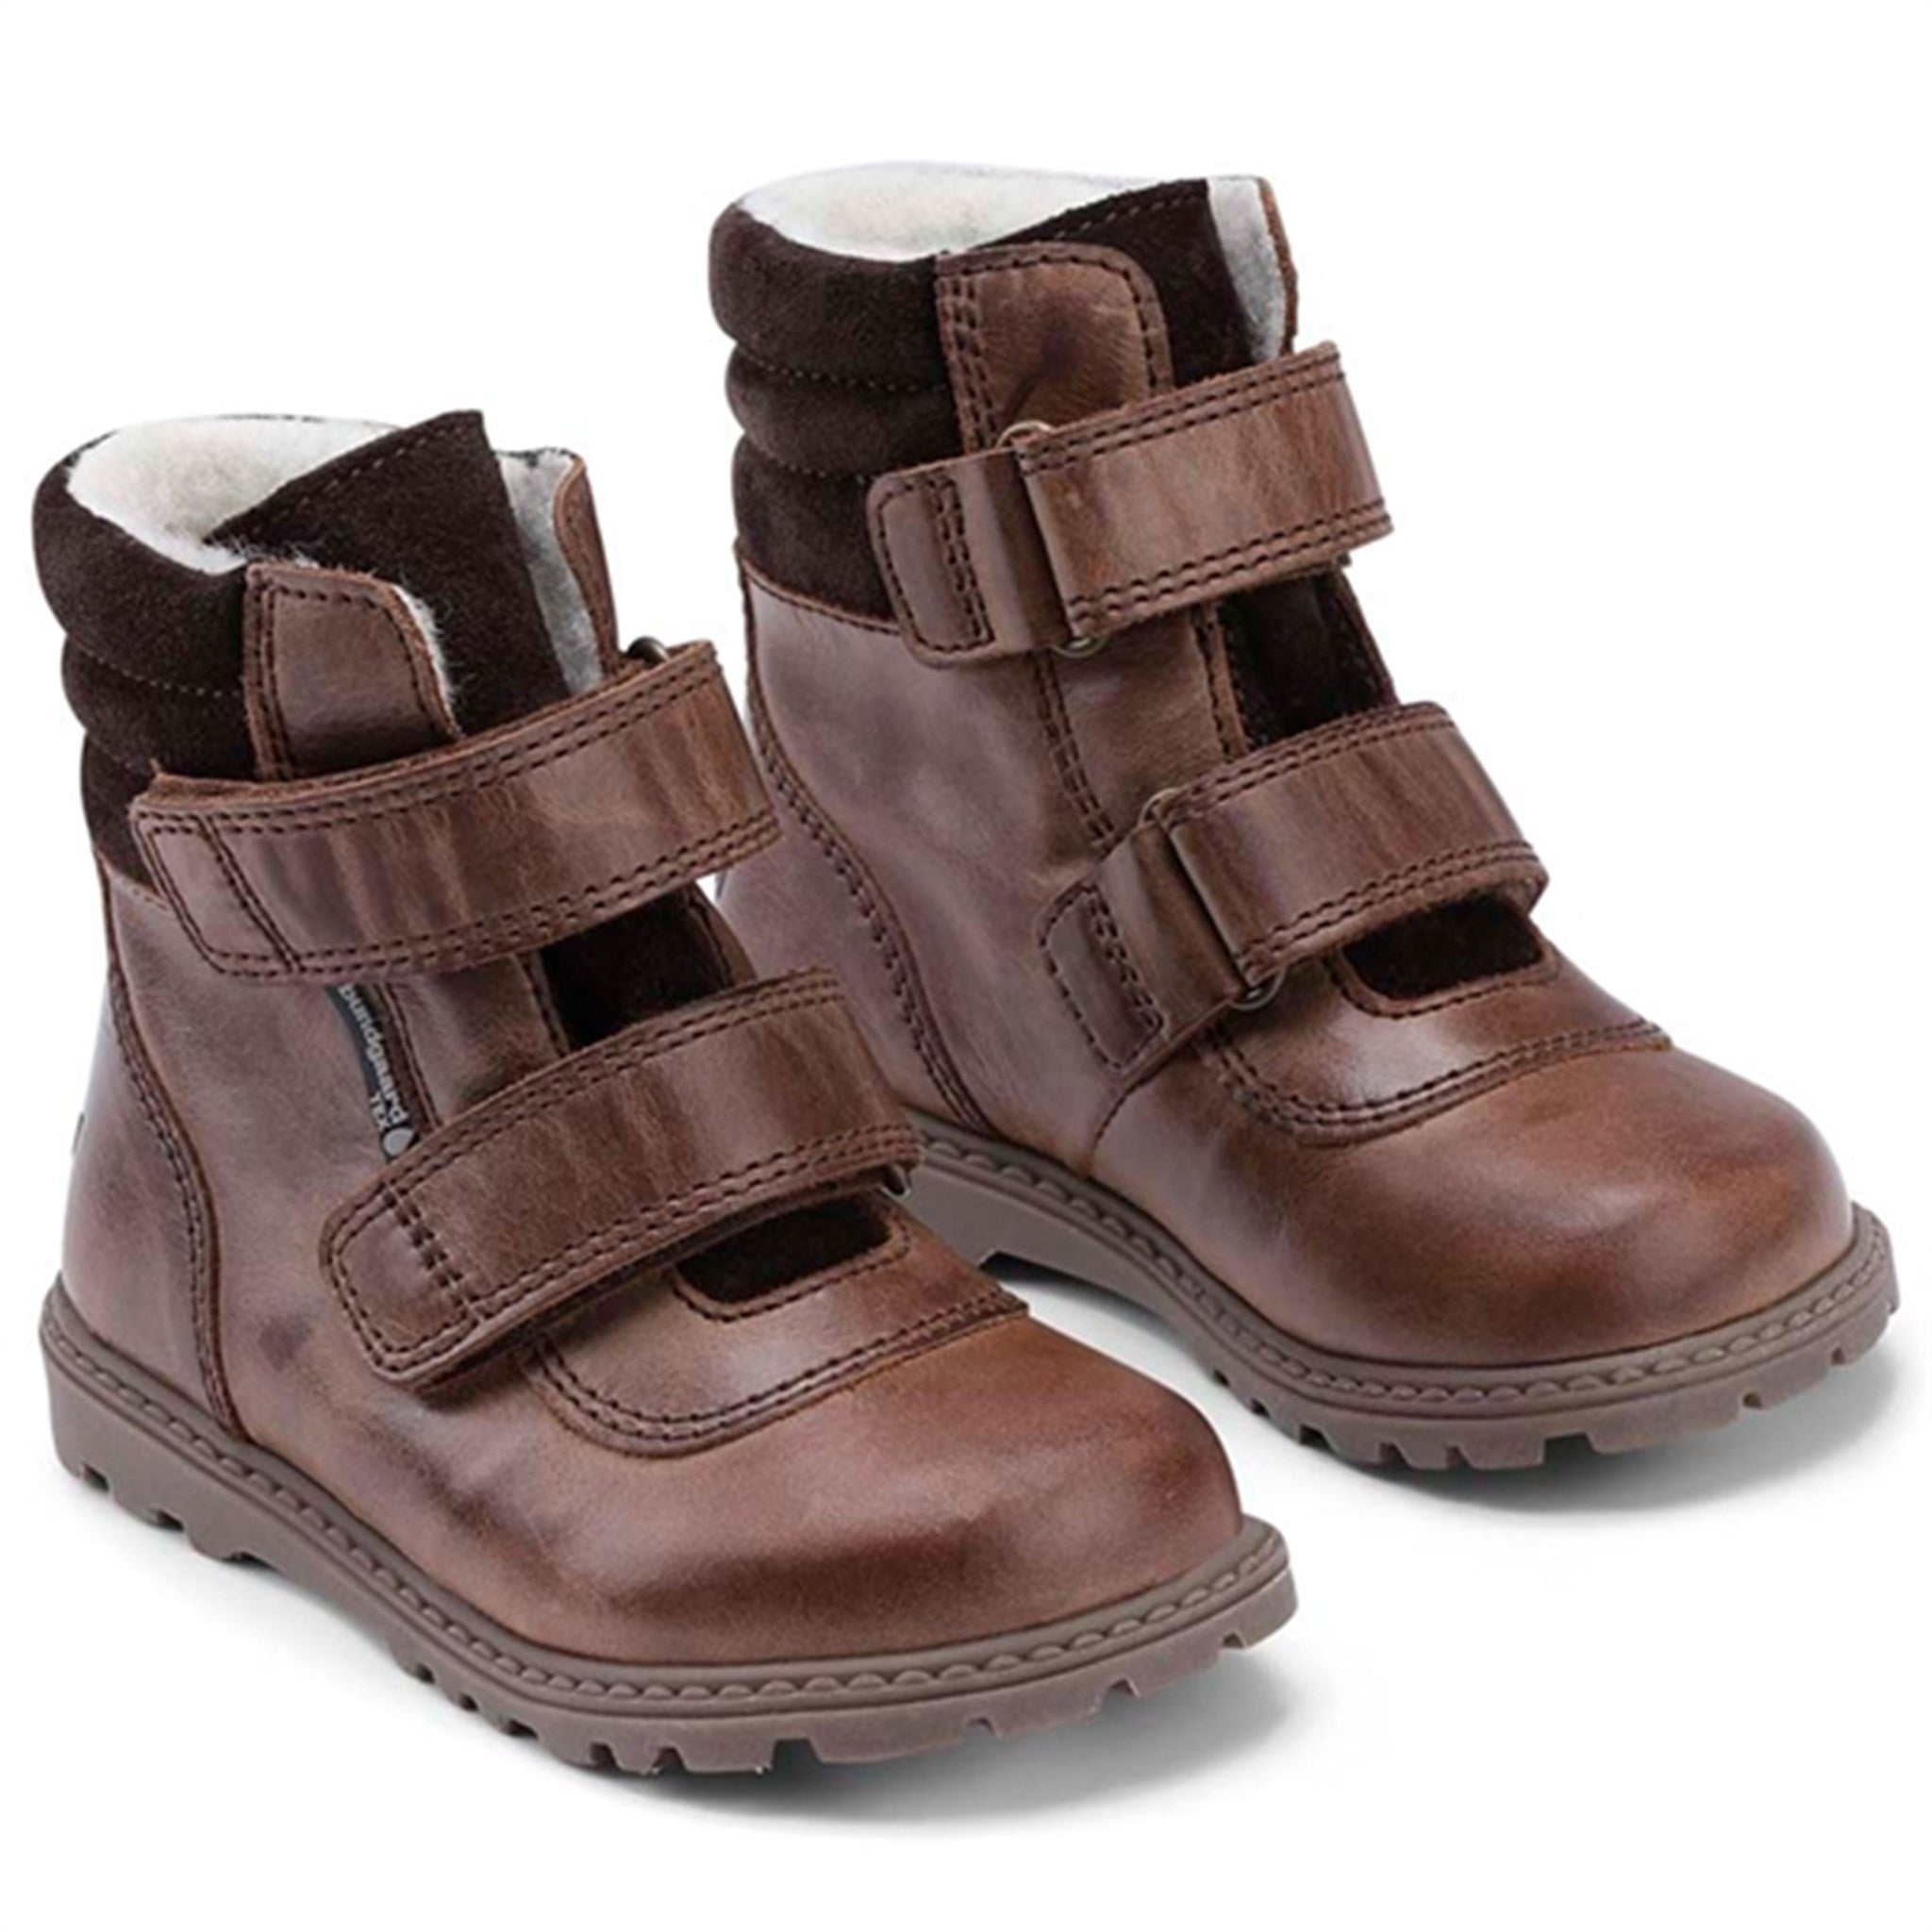 Bundgaard Tokker TEX Winter Boots Brown WS 2